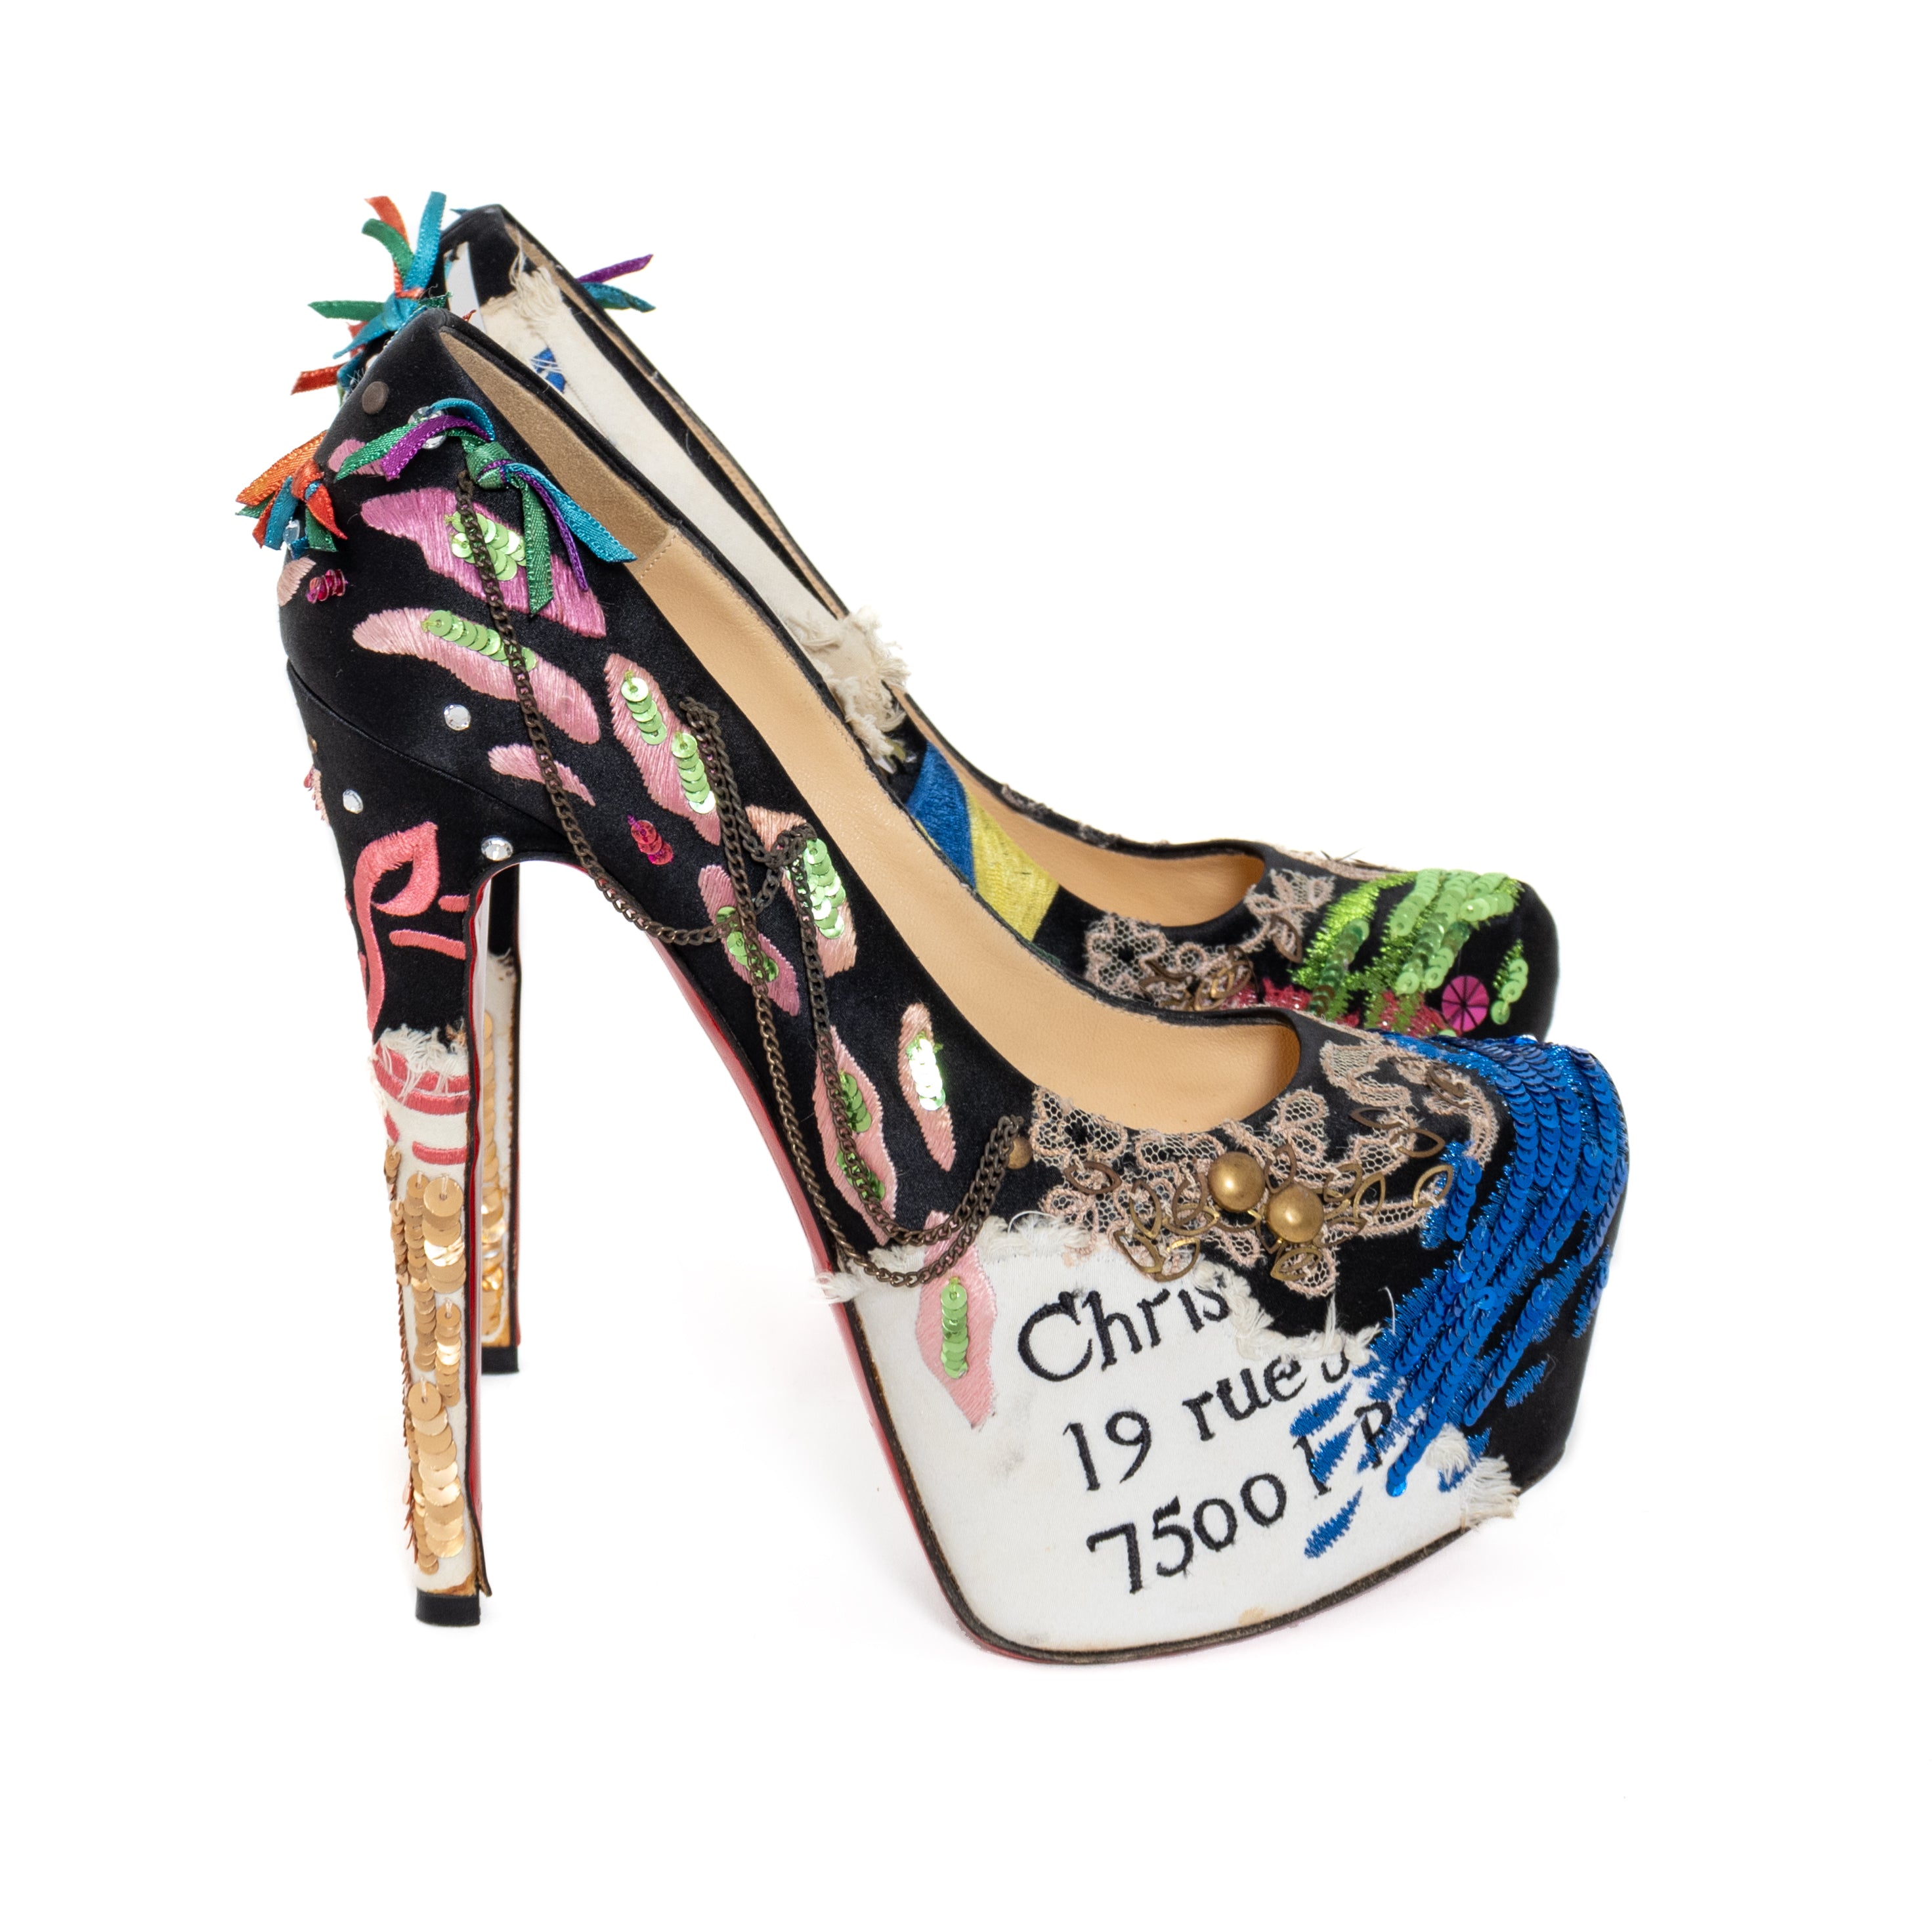 Reddot.rn heels | A Custom Shoe concept by James Etheridge